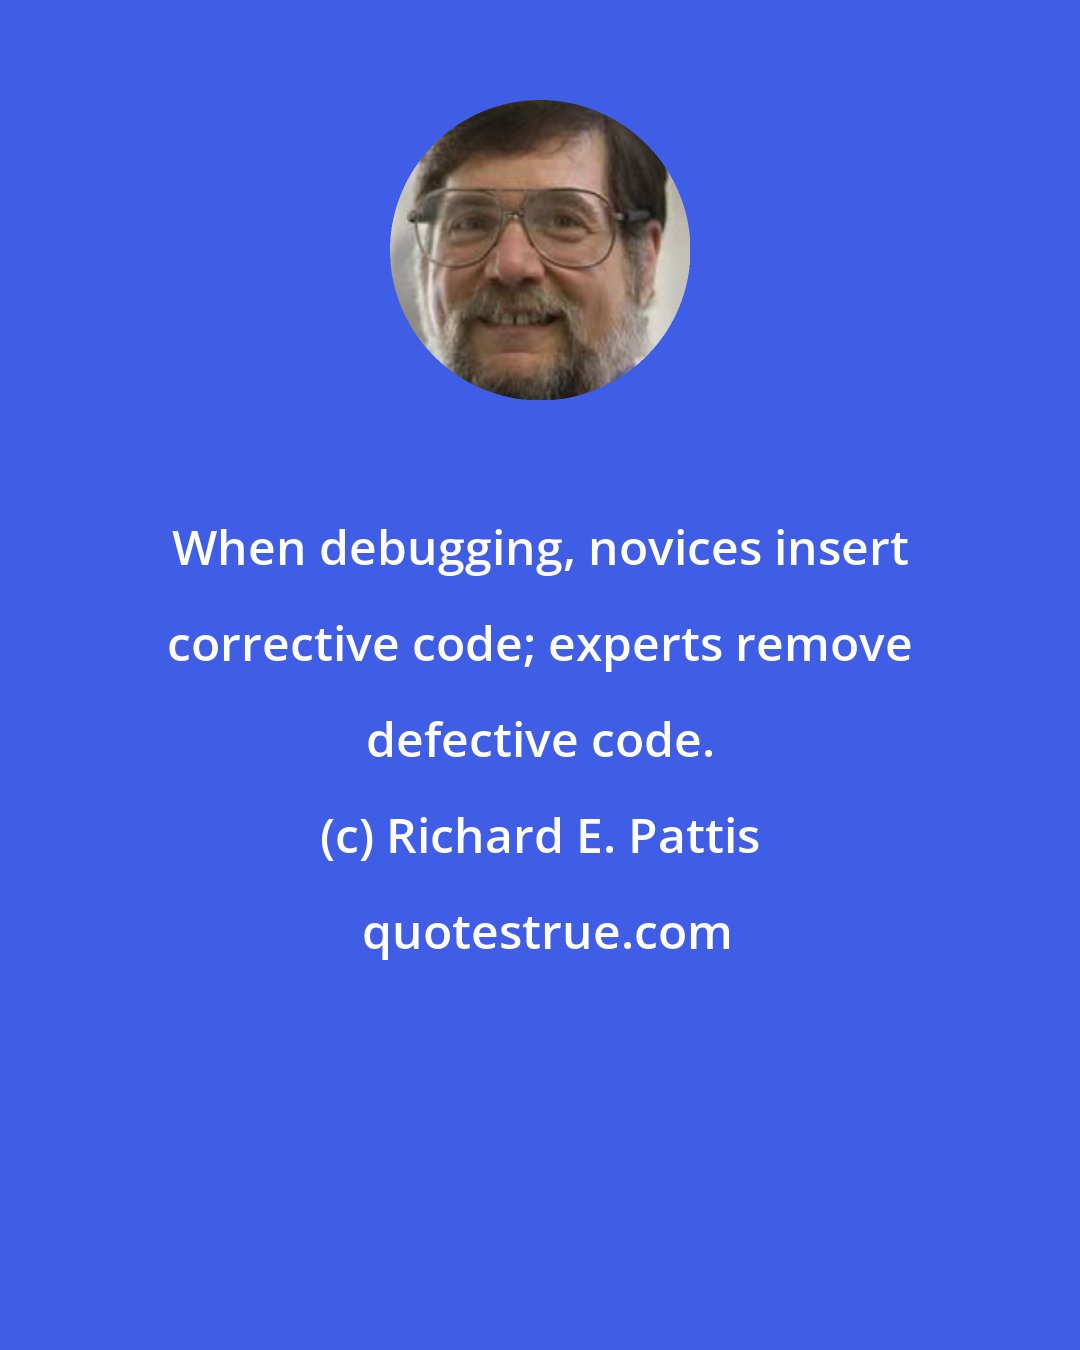 Richard E. Pattis: When debugging, novices insert corrective code; experts remove defective code.